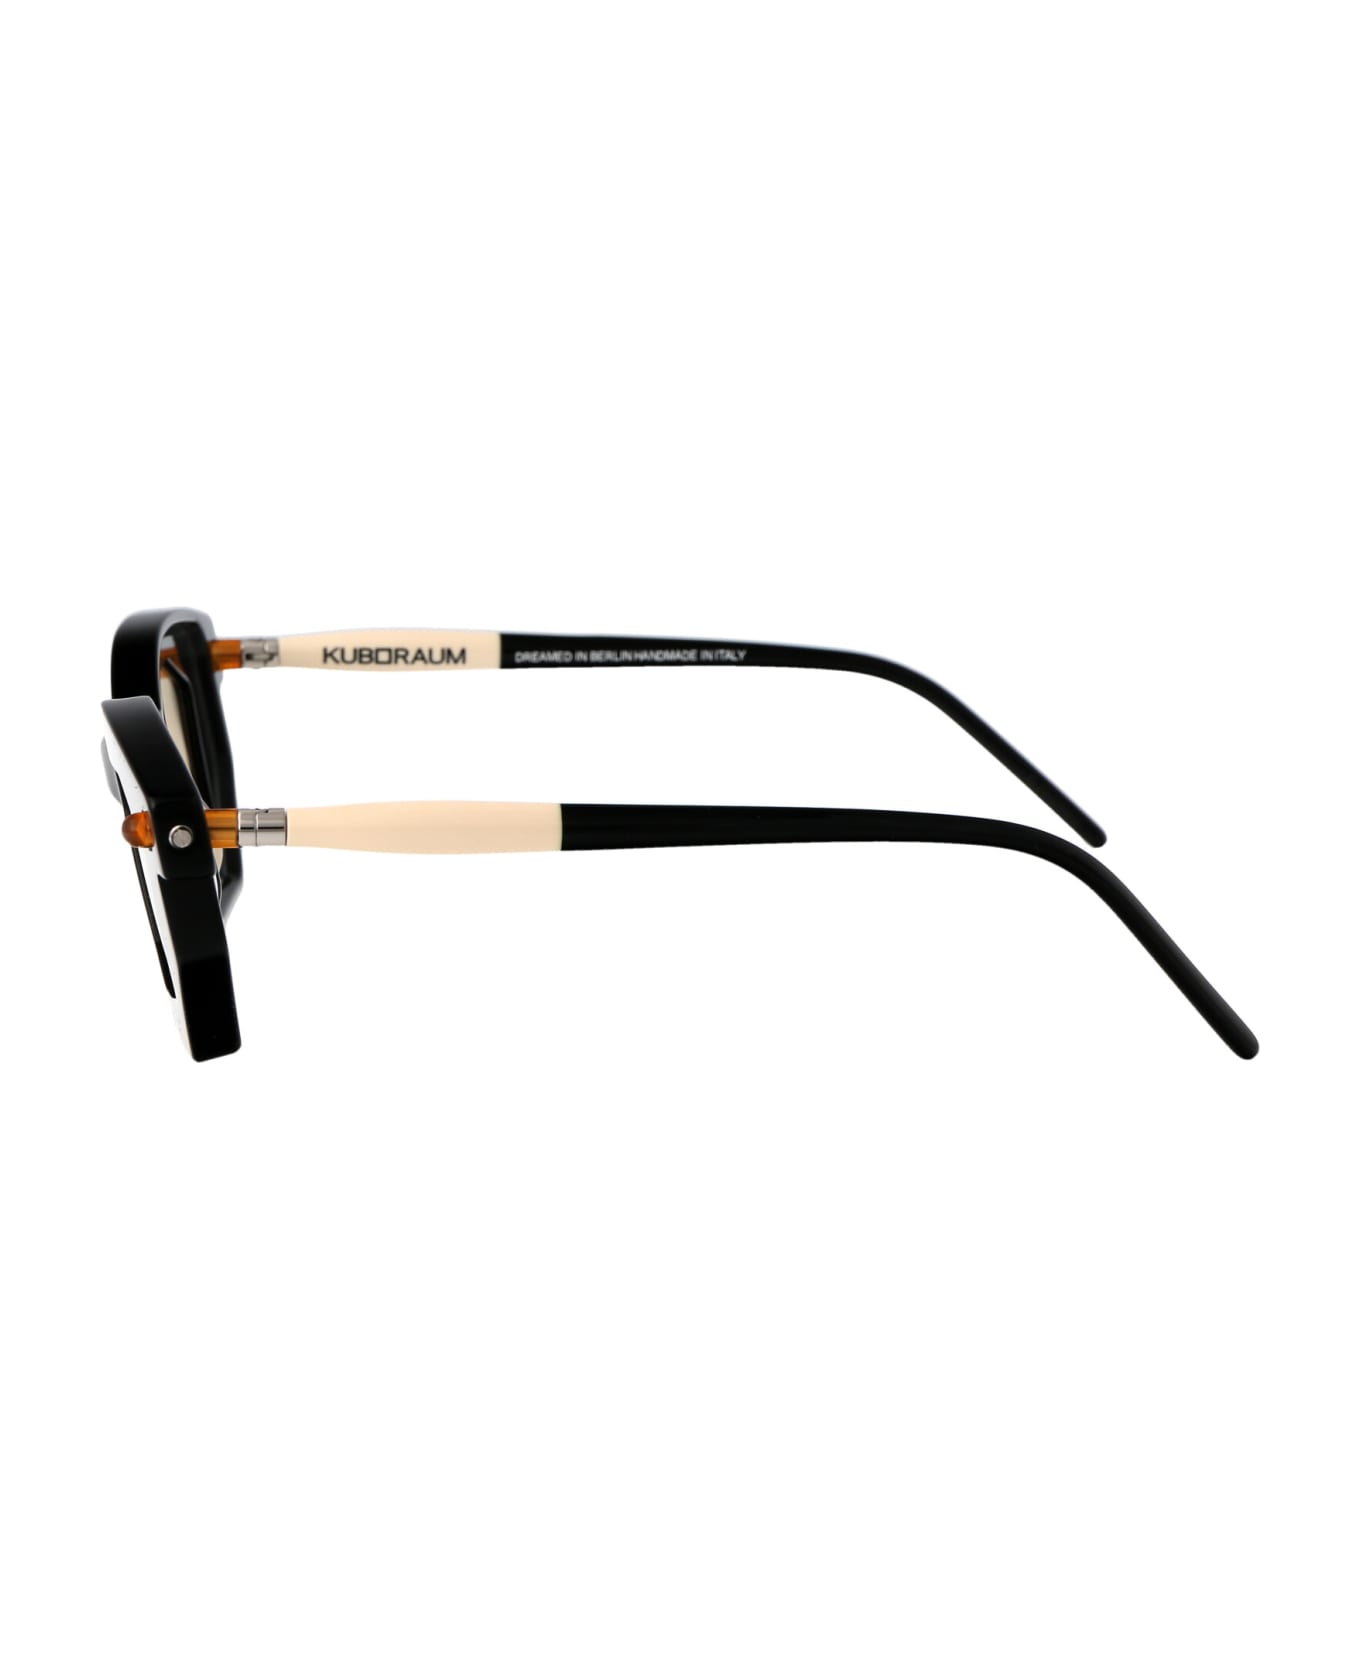 Kuboraum Maske P14 Sunglasses -  BS brown1